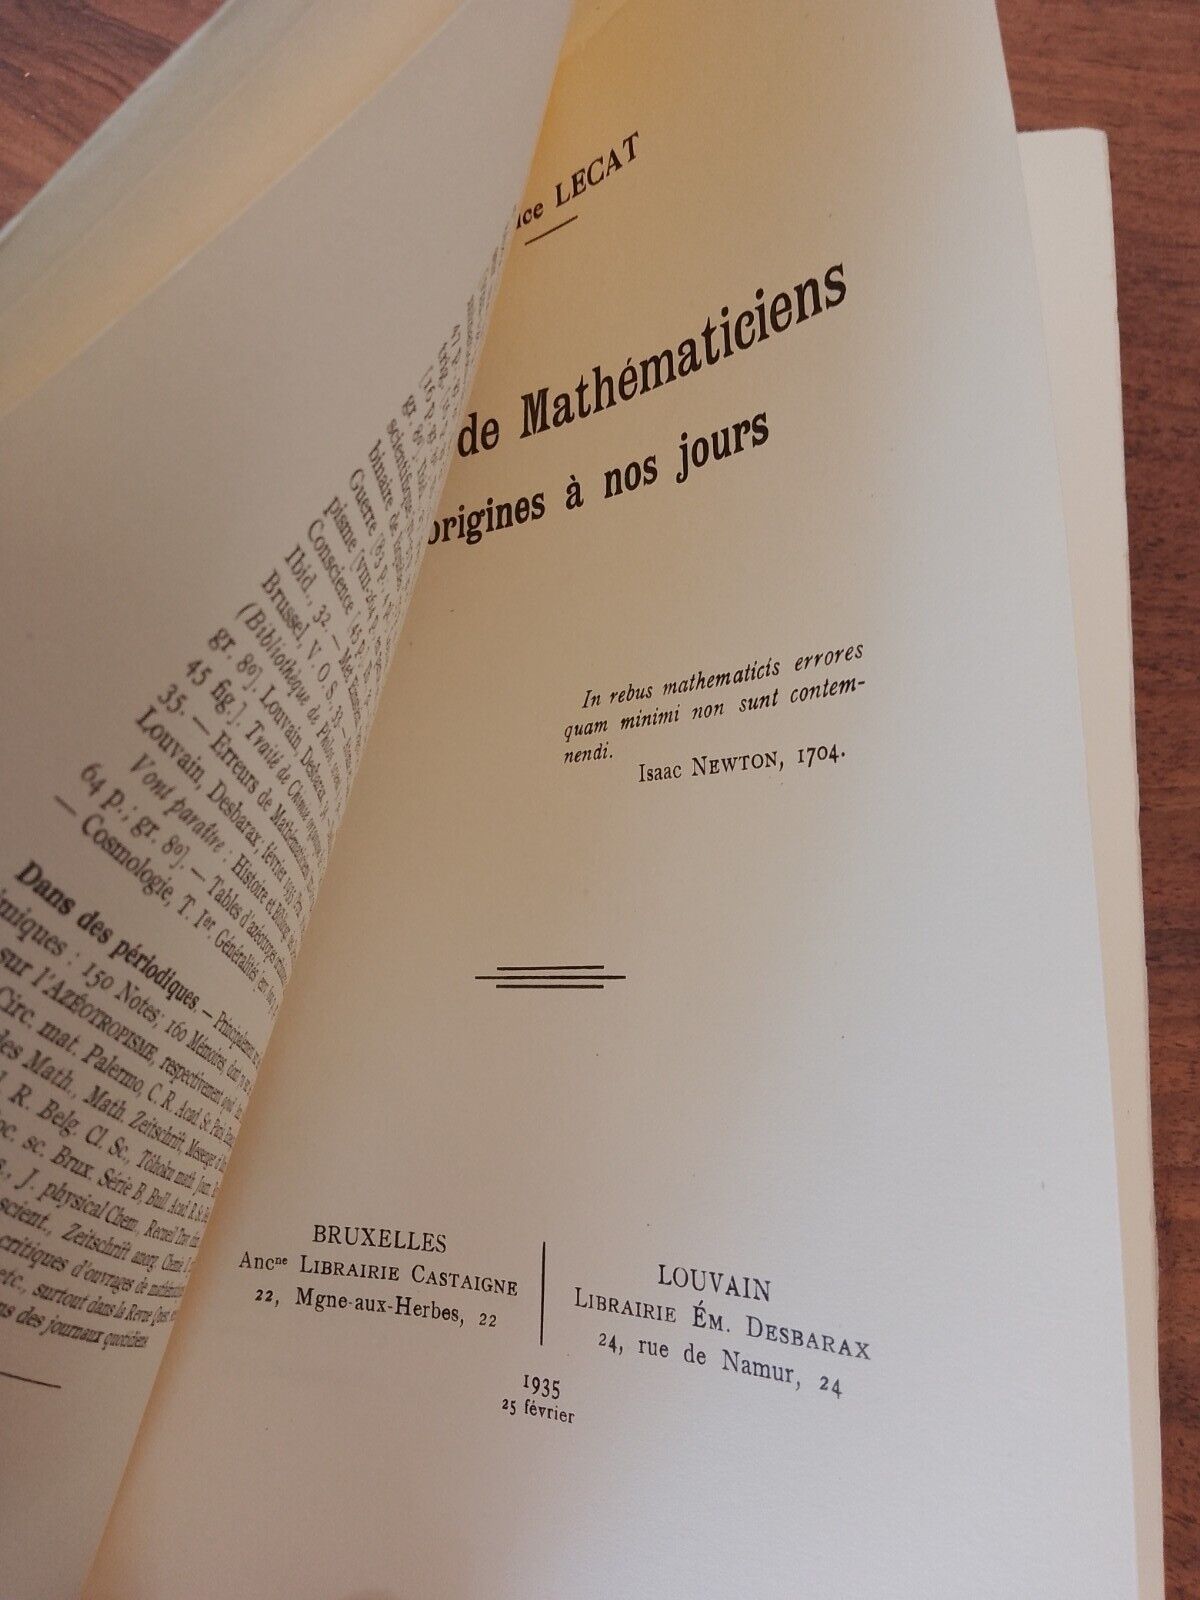 Erreurs de Mathematiciens, M. Lecat, 1935 RARO